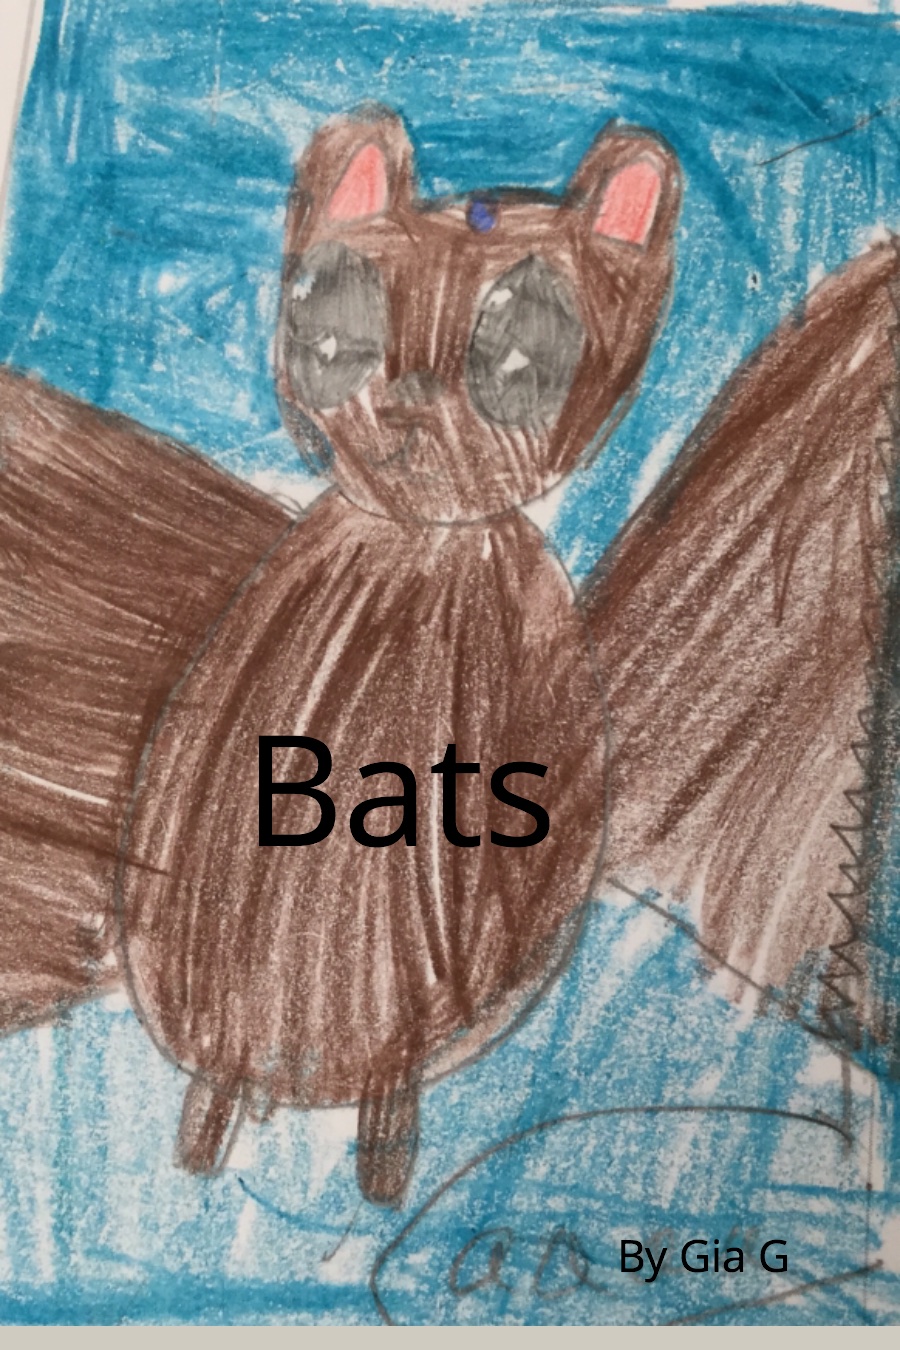 Bats by Gia G